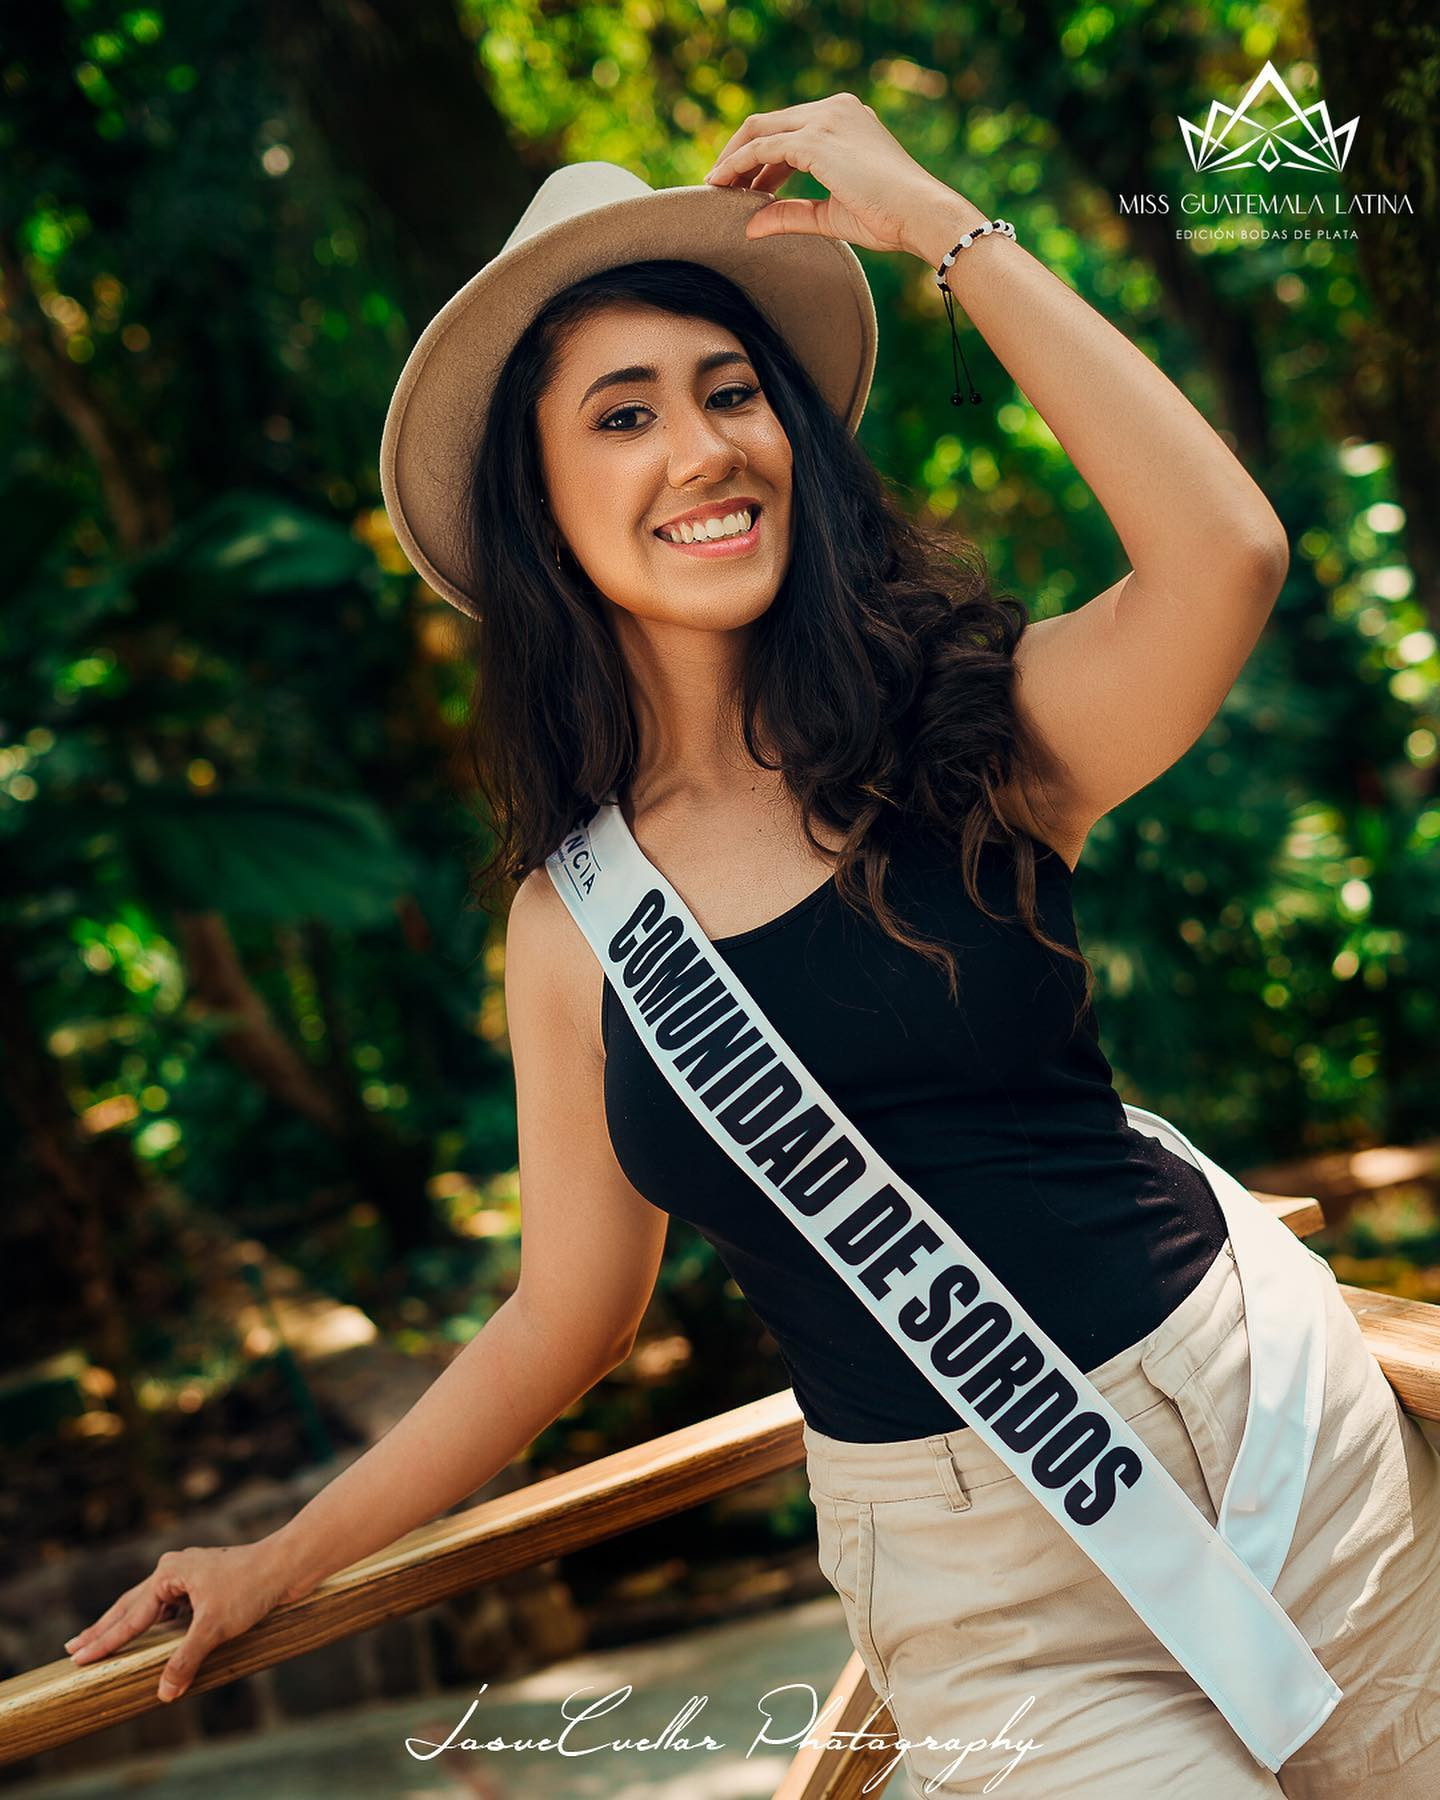 candidatas a miss guatemala latina 2021. final: 30 de abril. - Página 7 BFjkRn